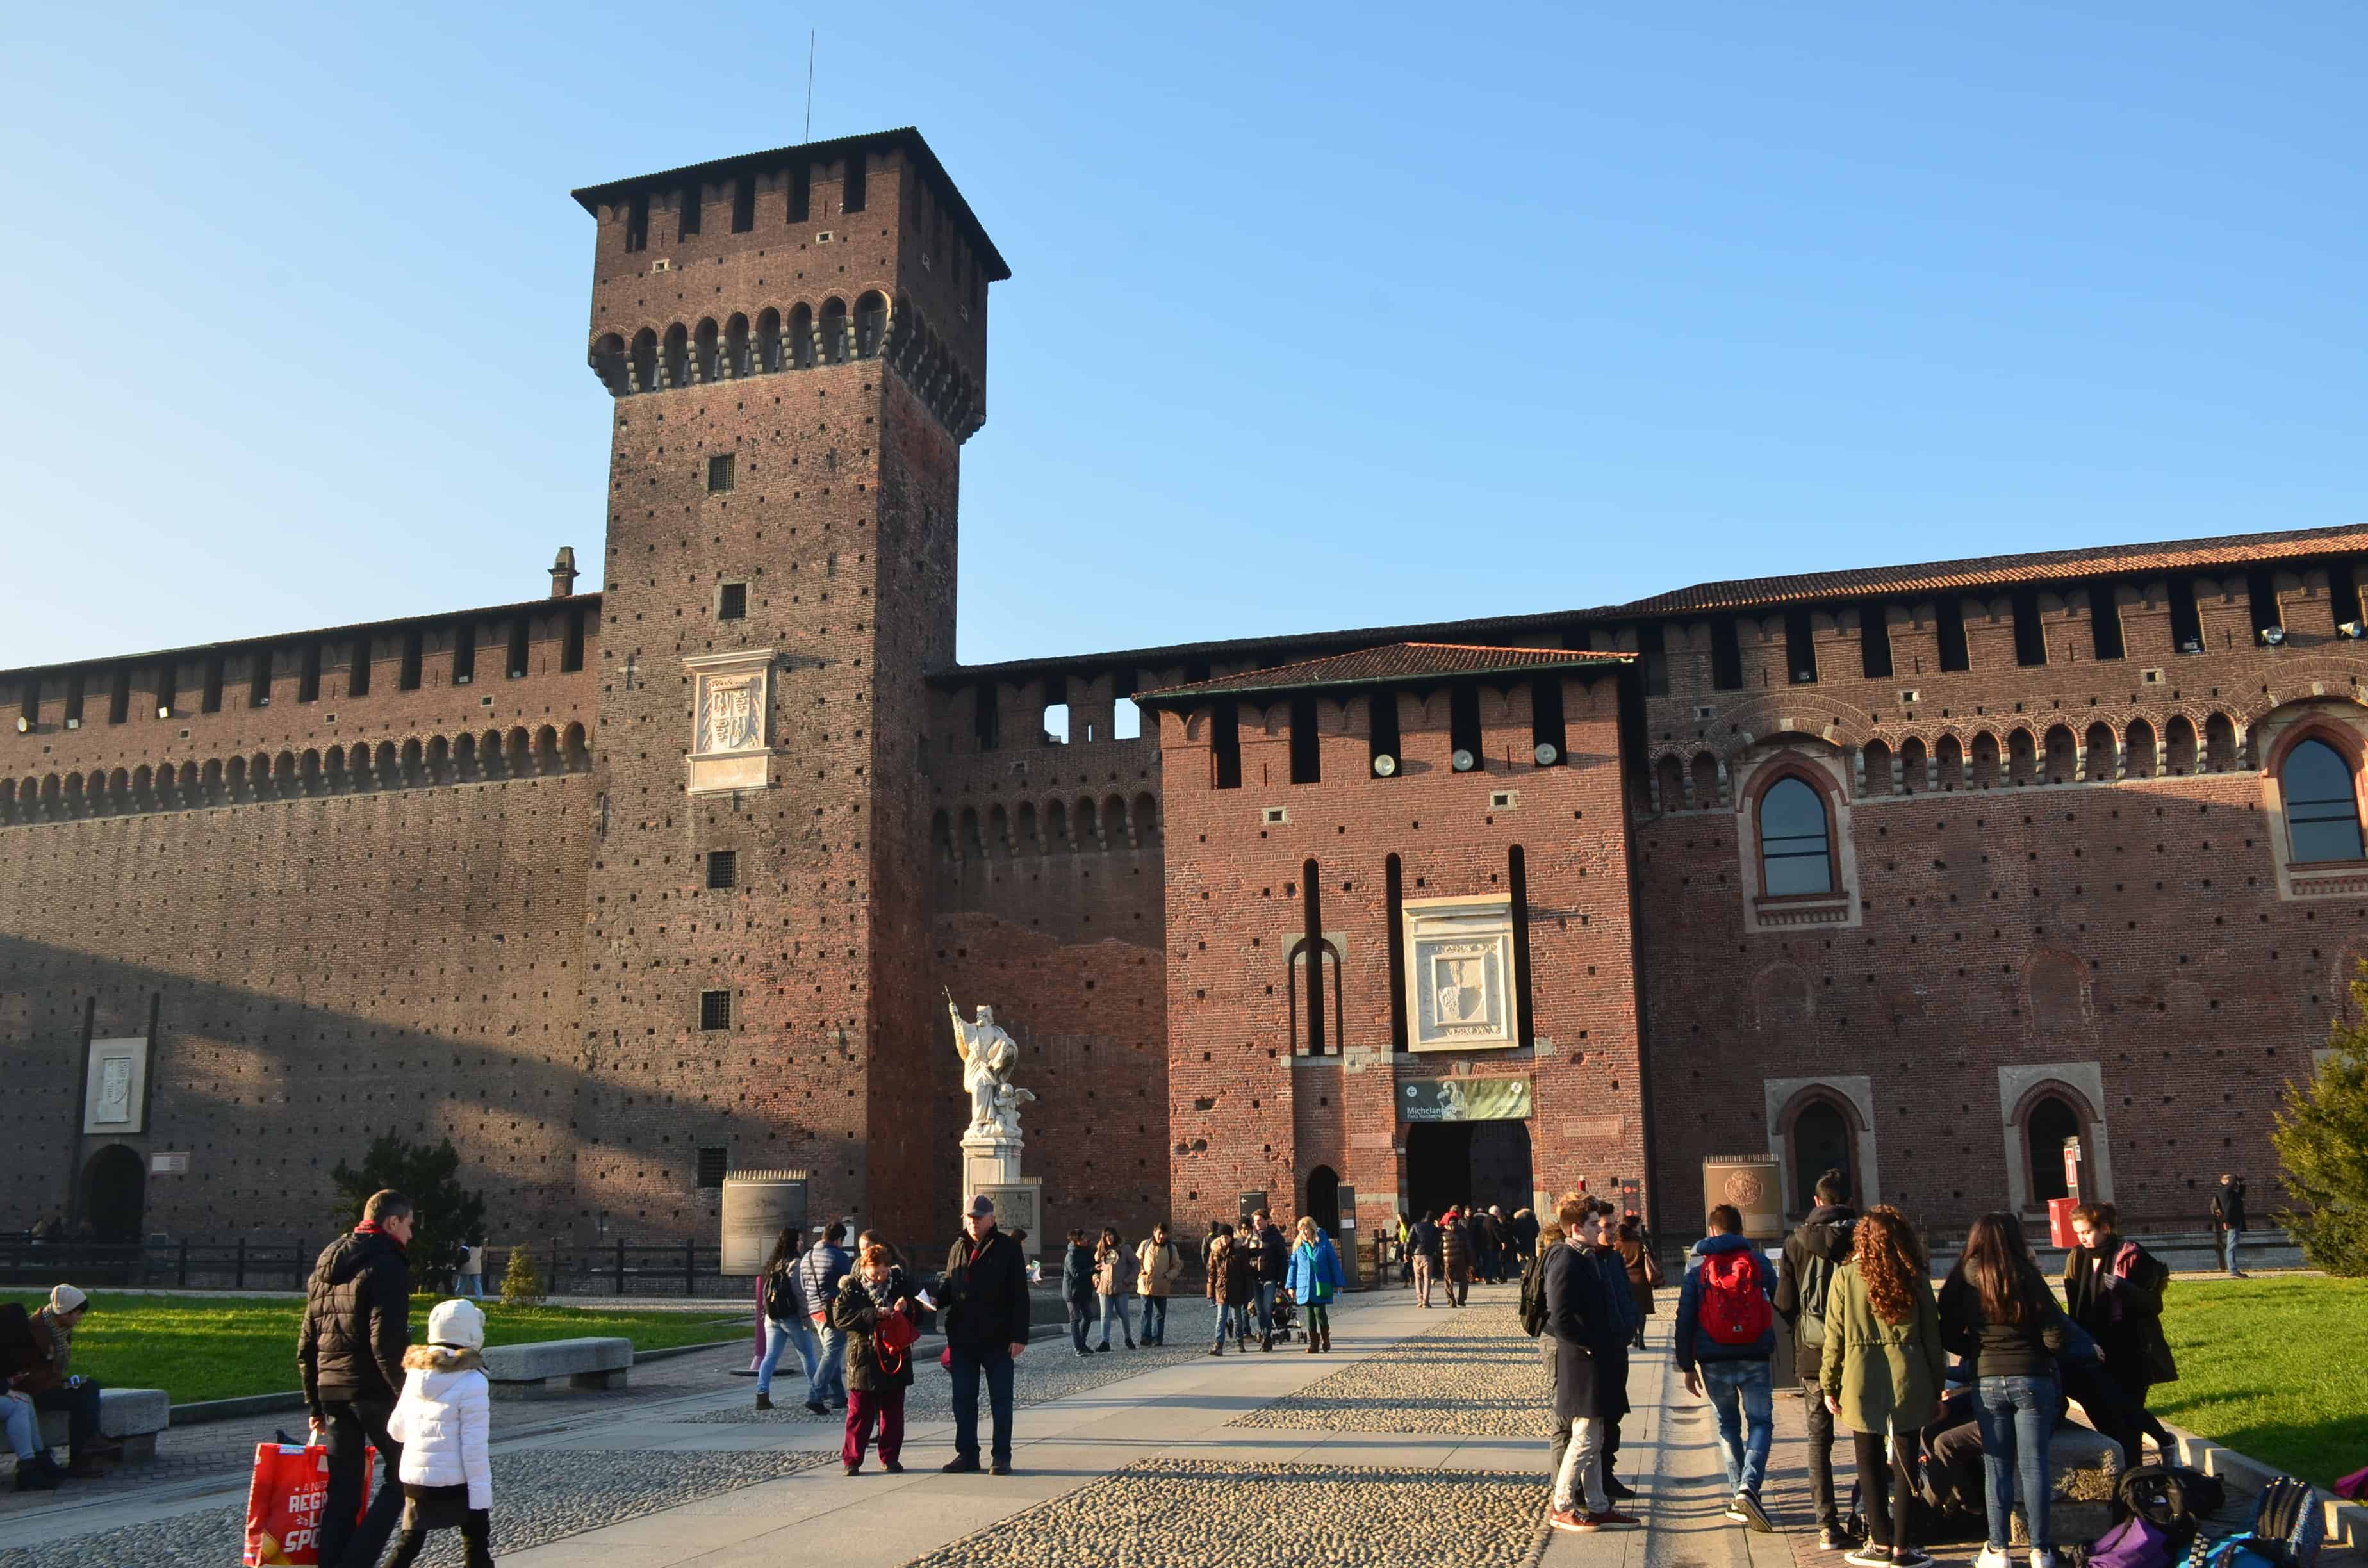 Bona Tower (left) at Sforza Castle in Milan, Italy